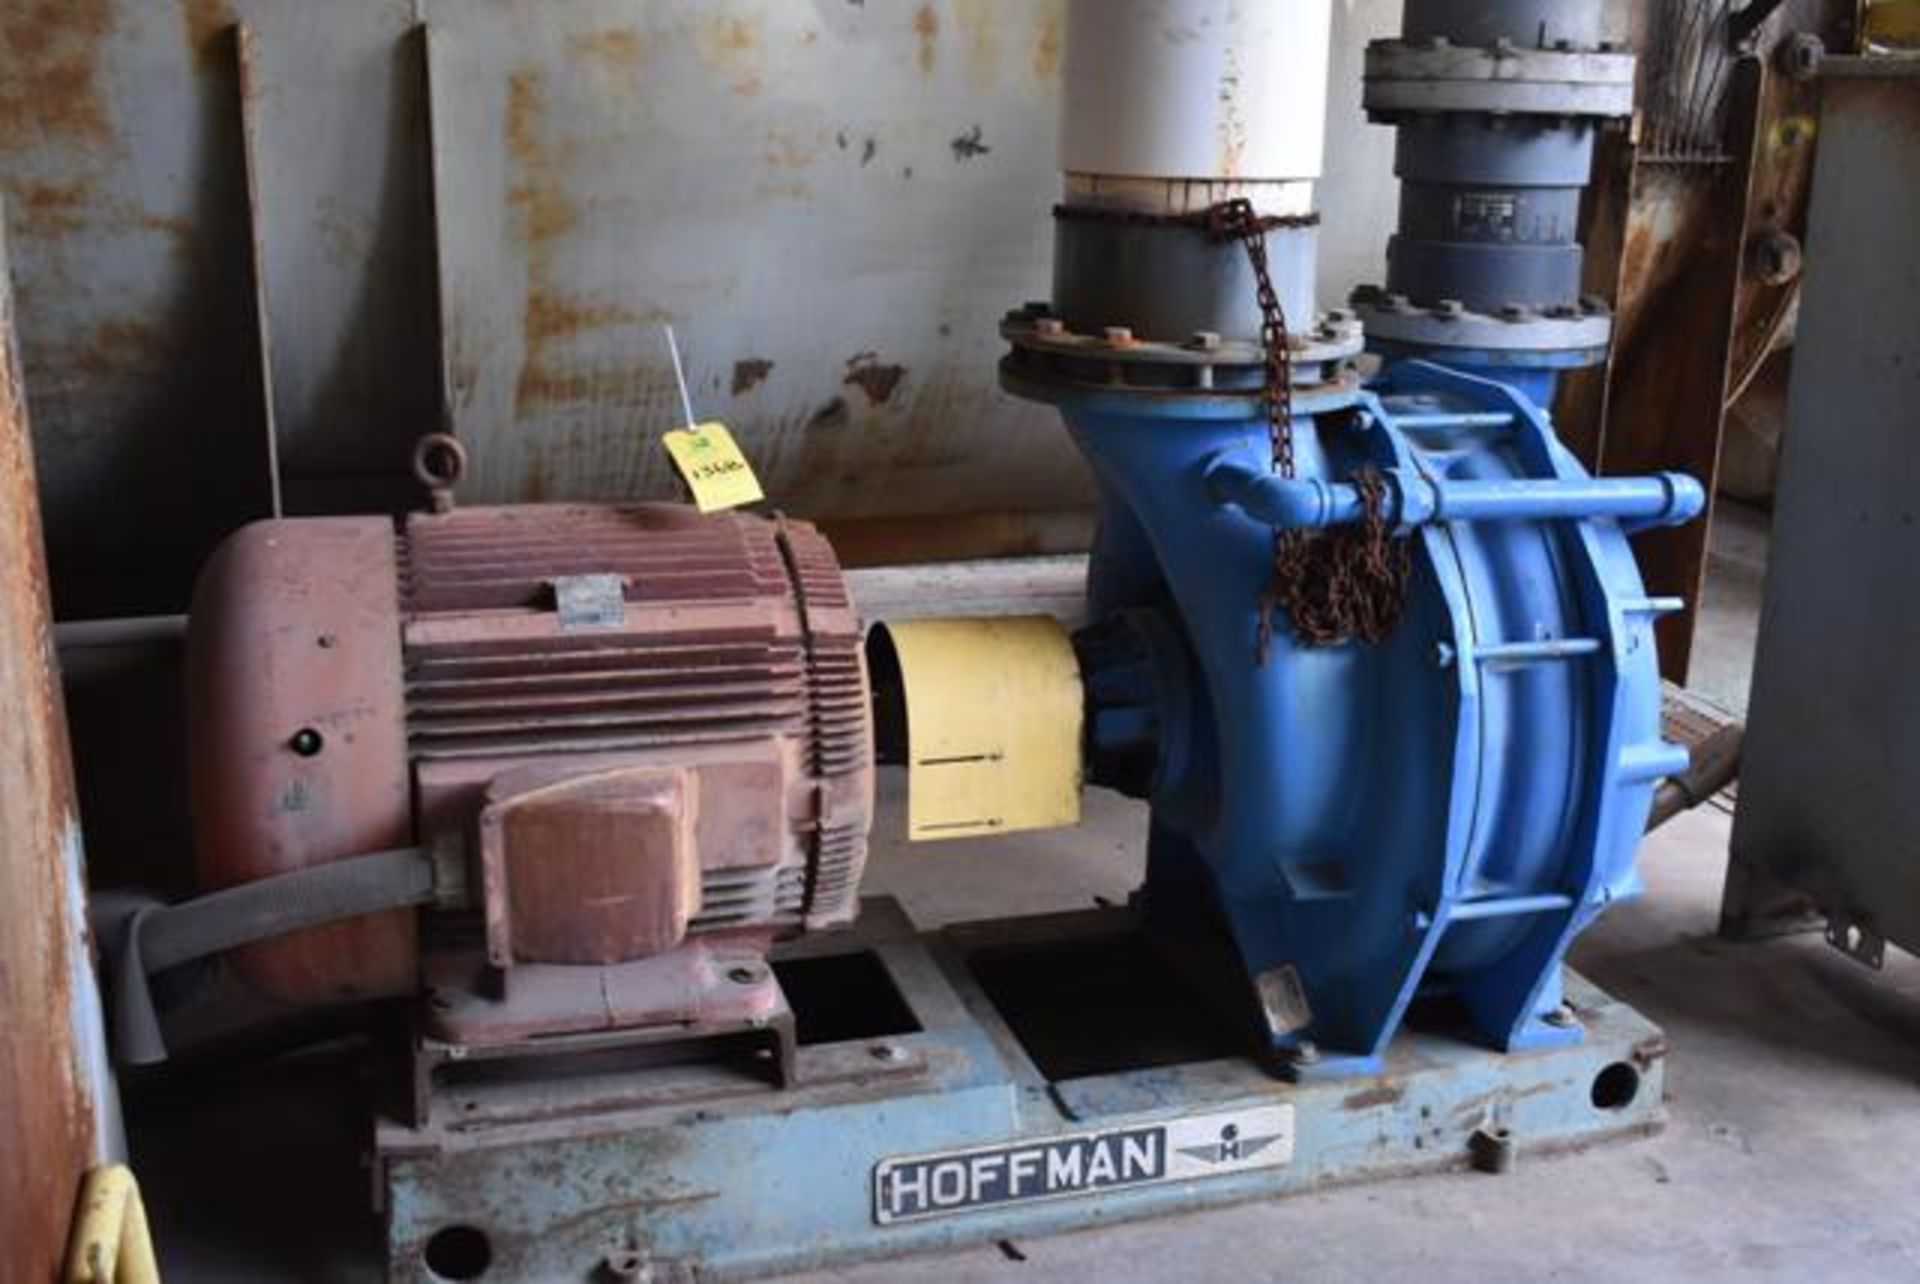 Hoffman Model #65102A1 Centrifugal Blower, 125 hp Motor, 460 Volt, Includes Technocheck Valve